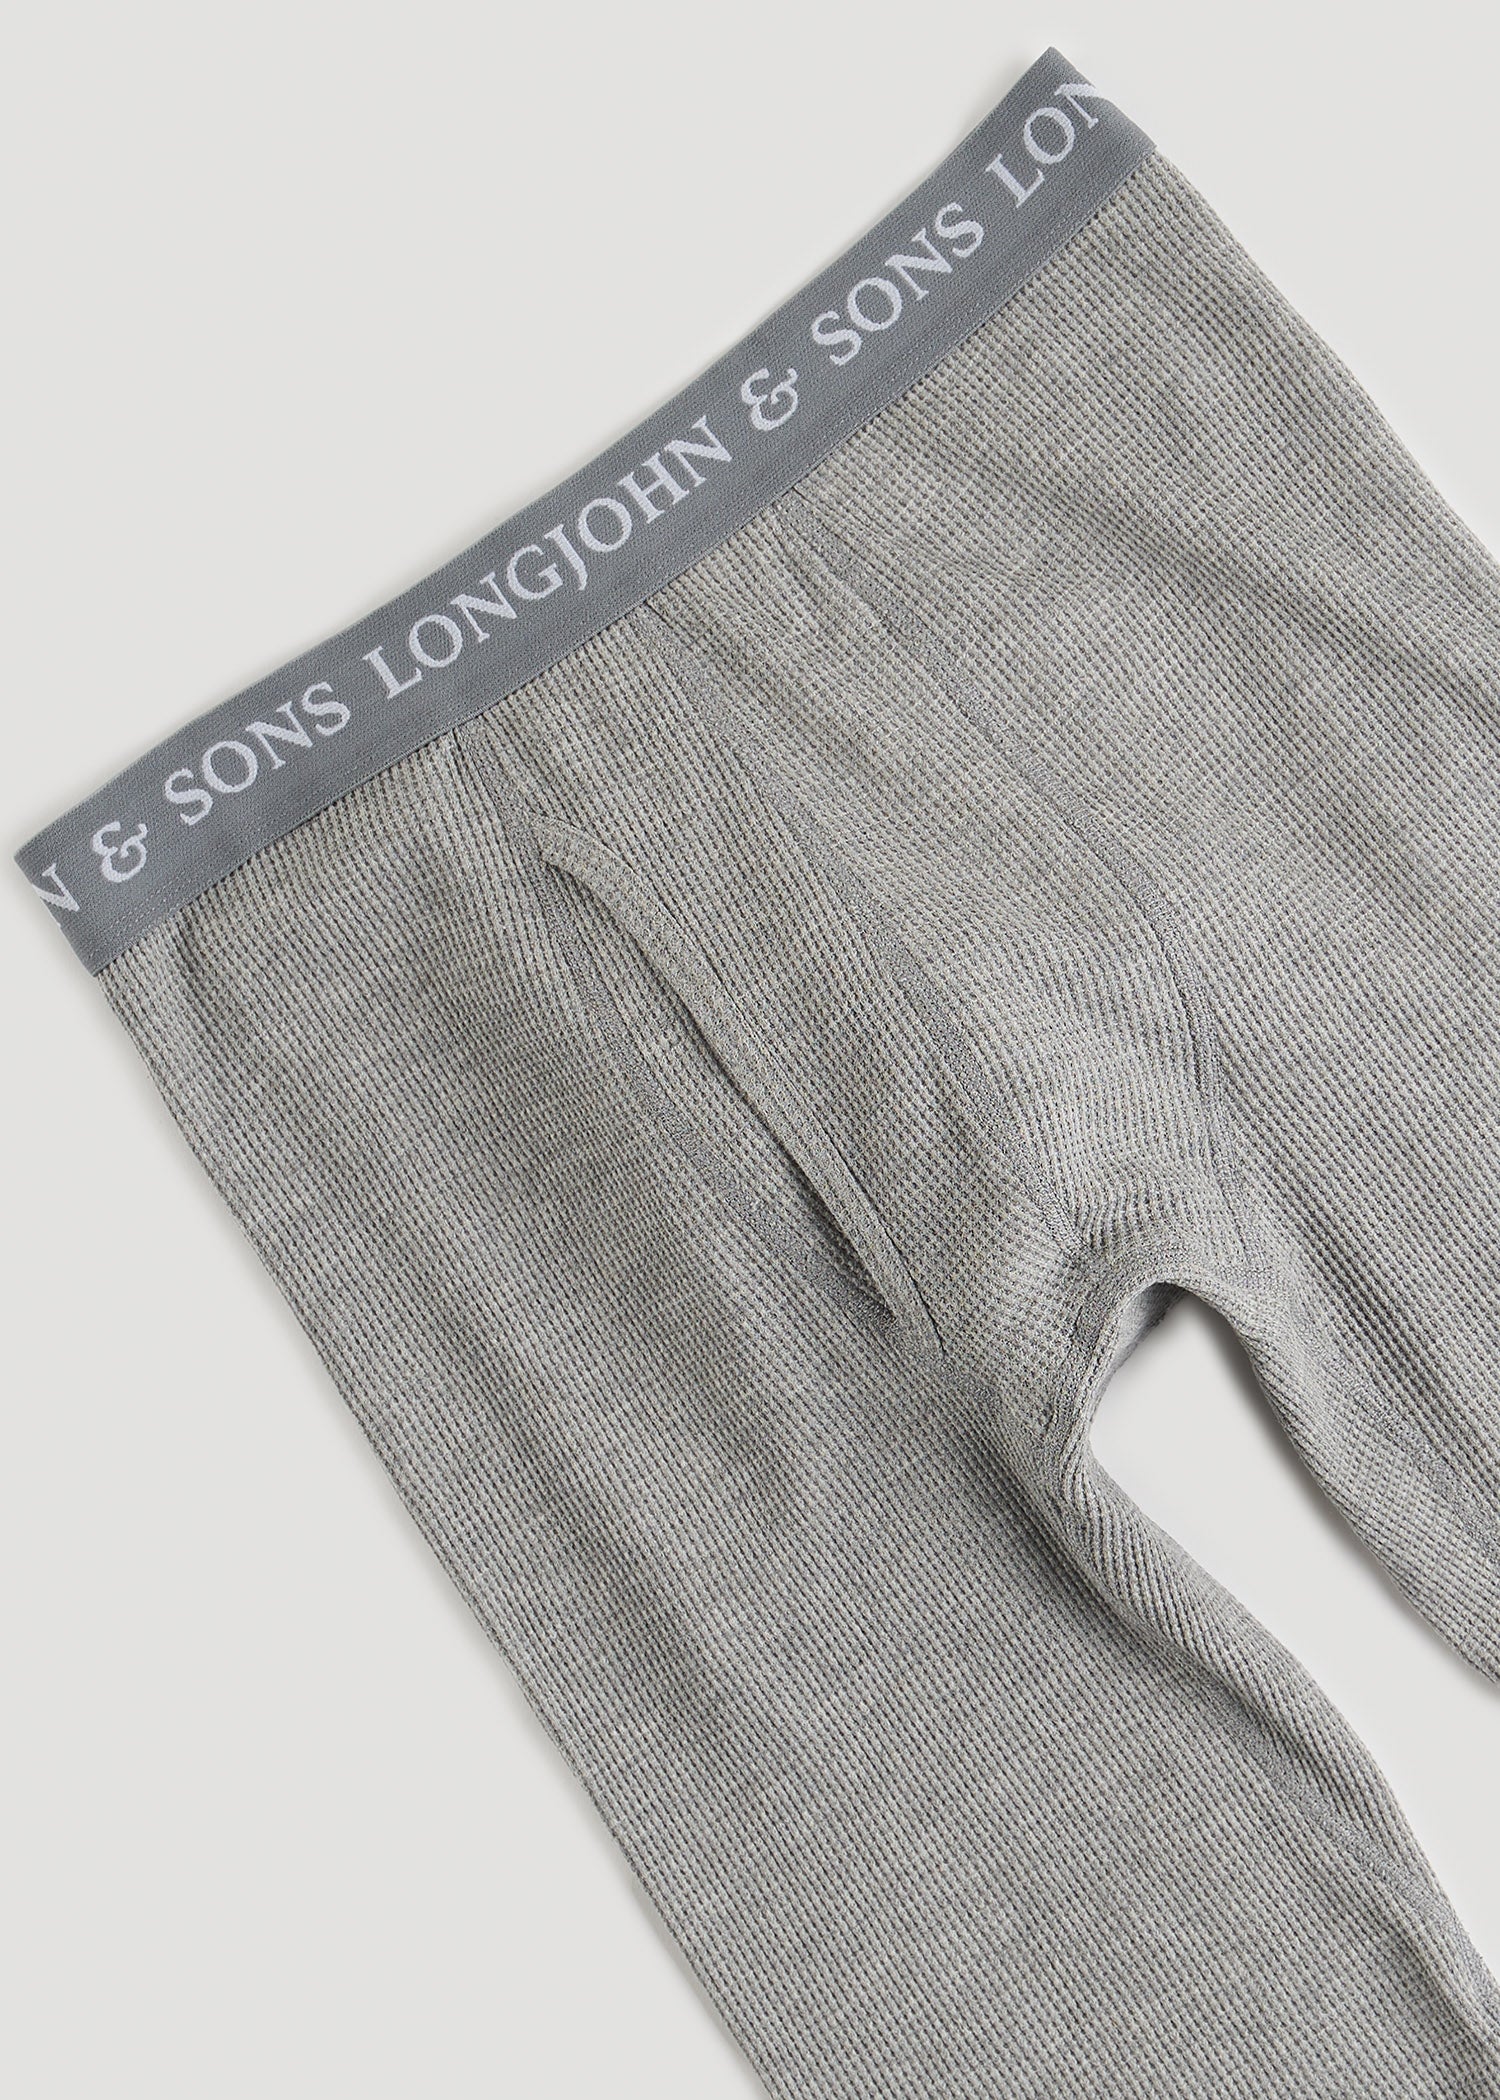 LJ&S Men's Tall Long Underwear Bottoms Grey Mix